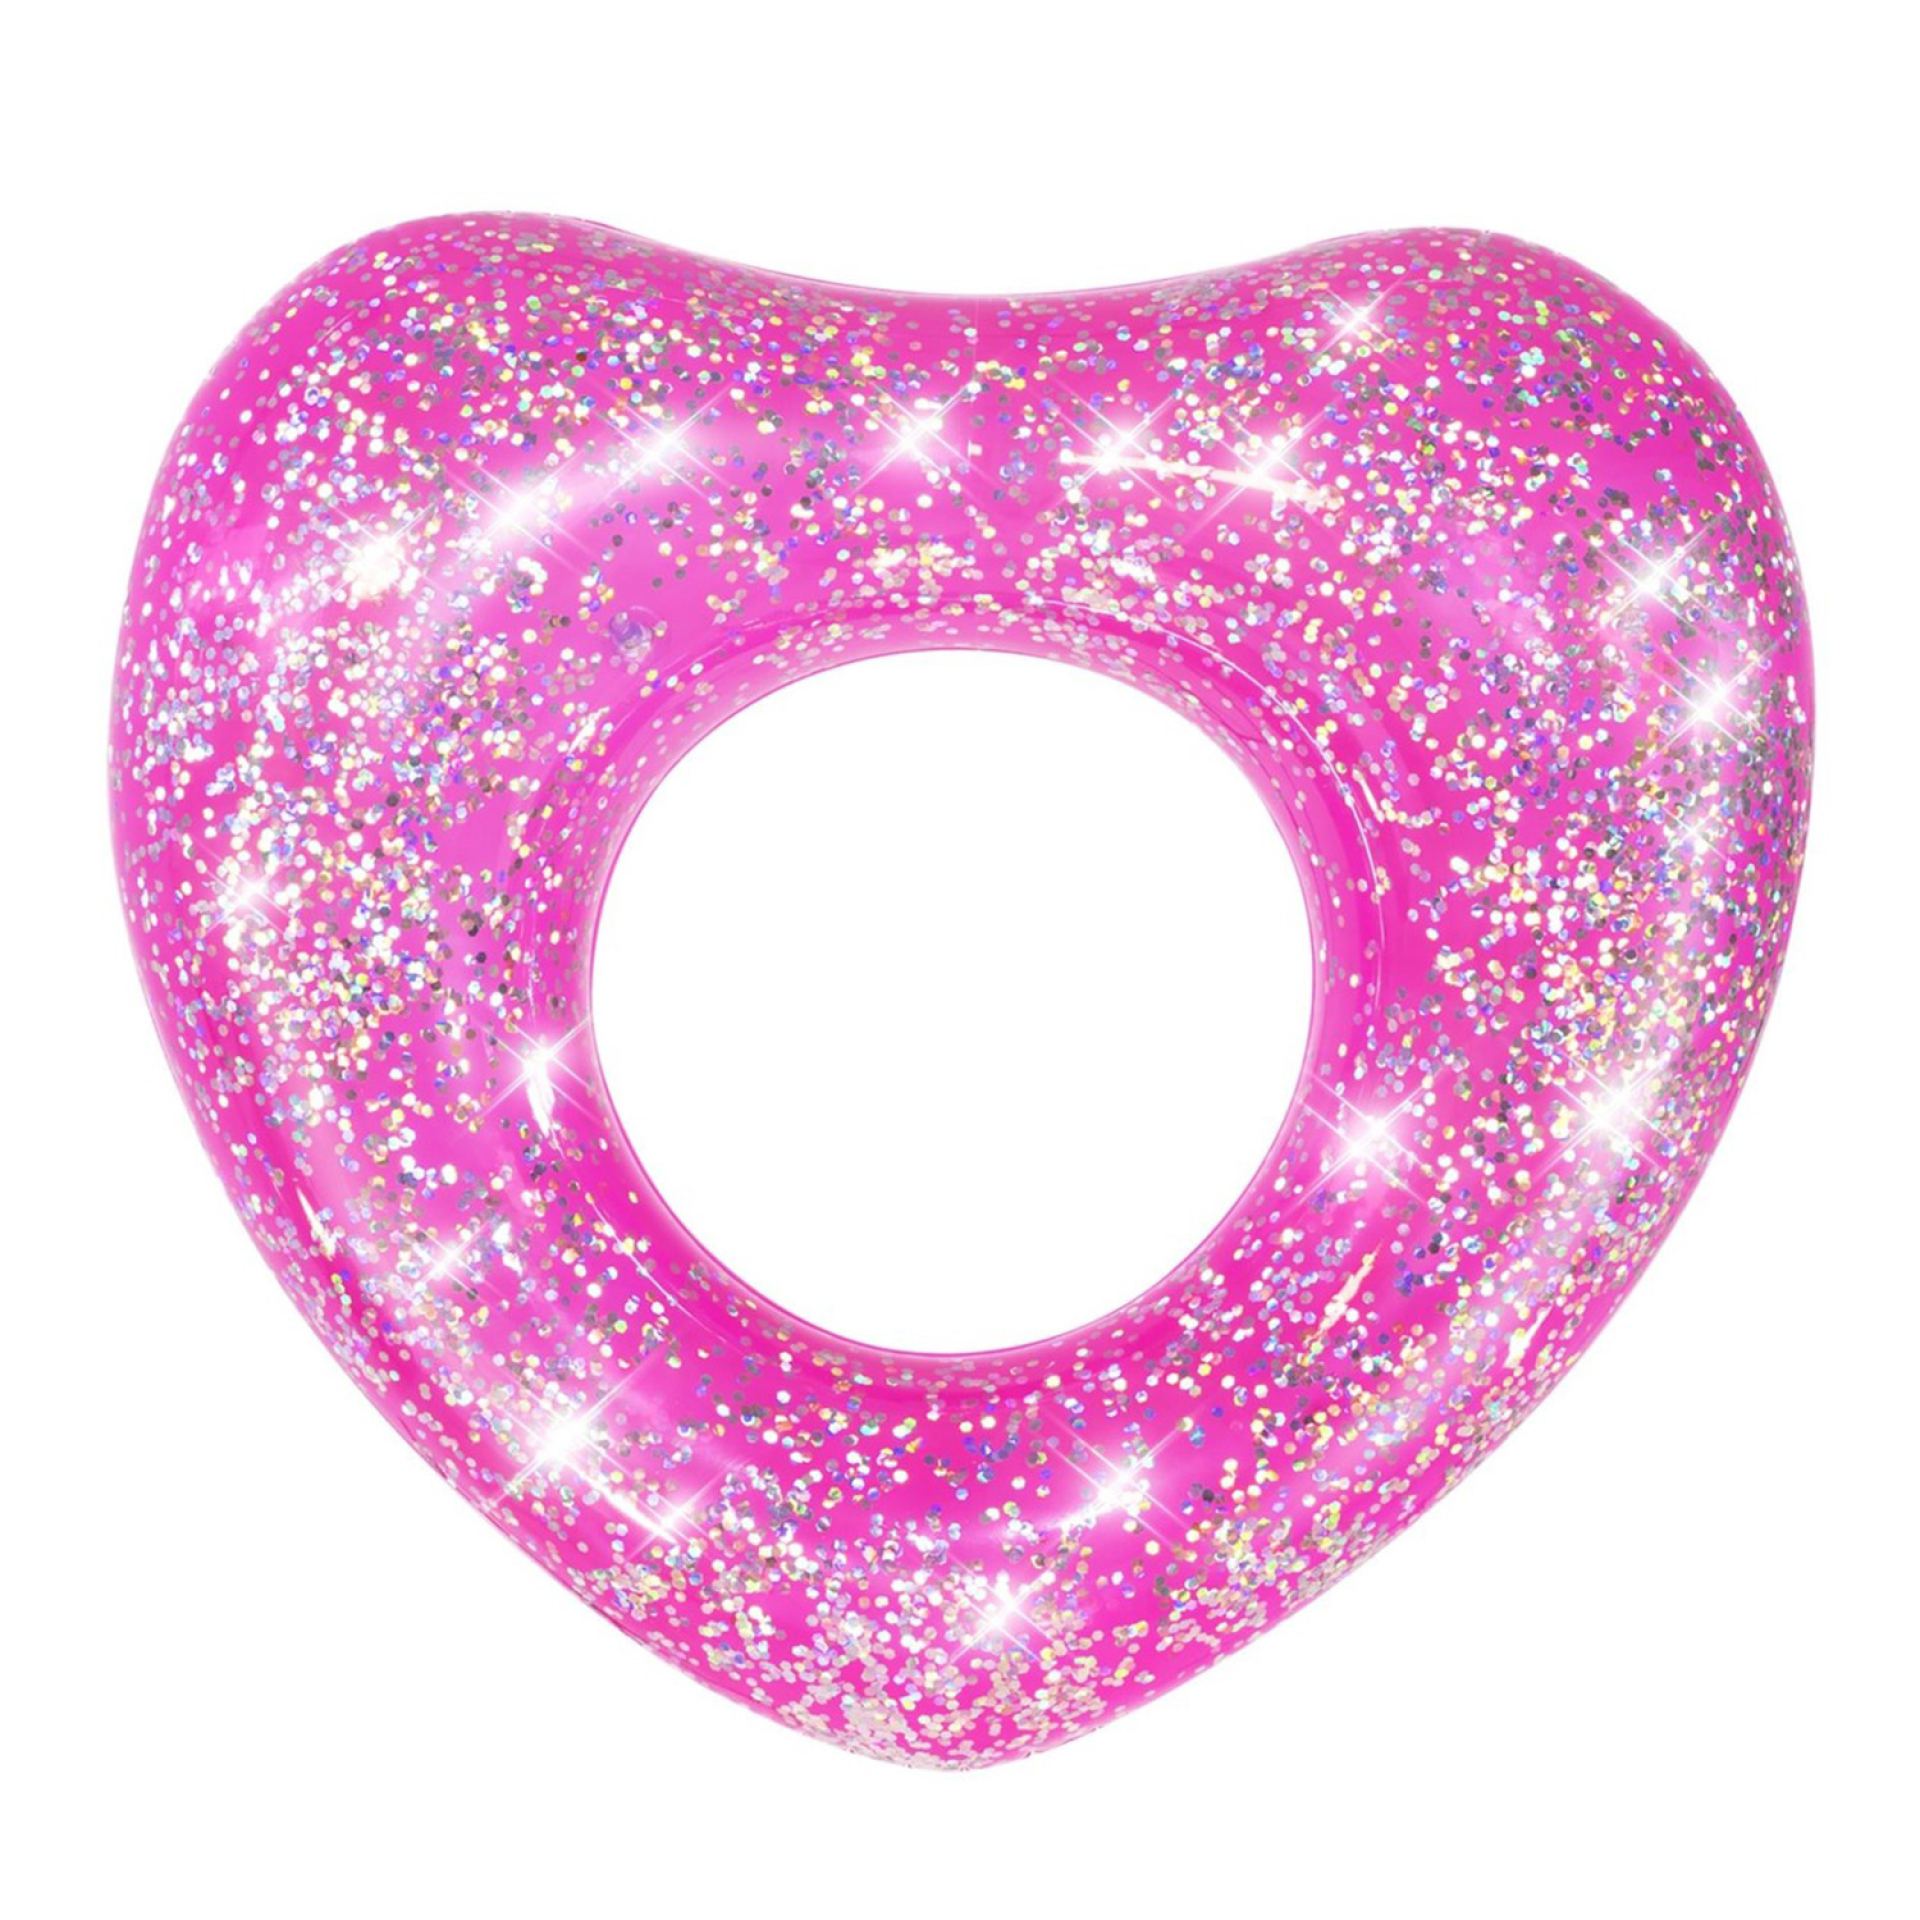 Bestway hart zwemband roze glitter 91cm